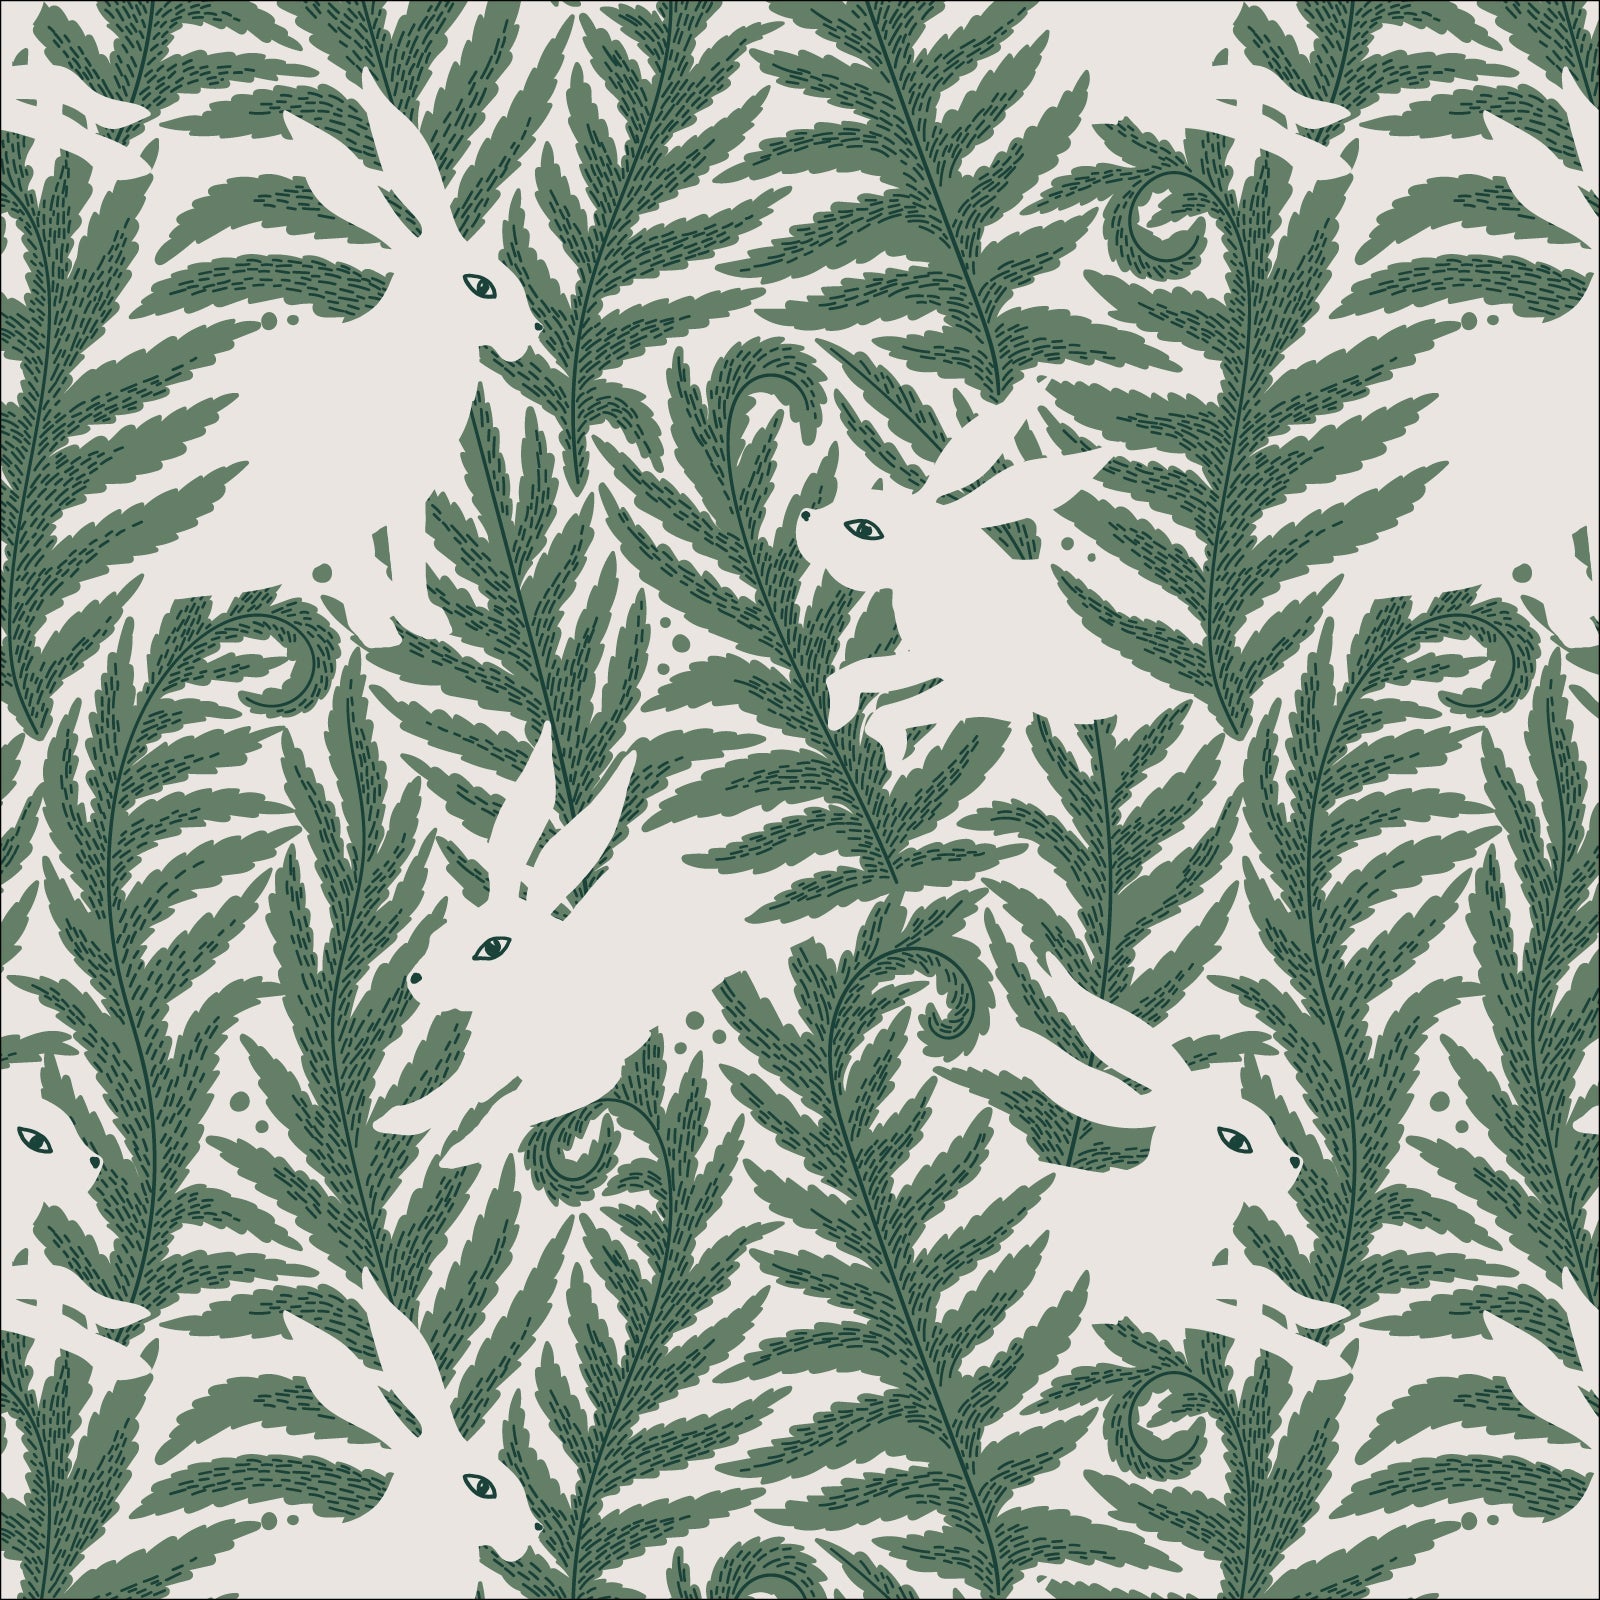 Baltic Woodland - Wild Hares Organic Cotton from Cloud9 Fabrics